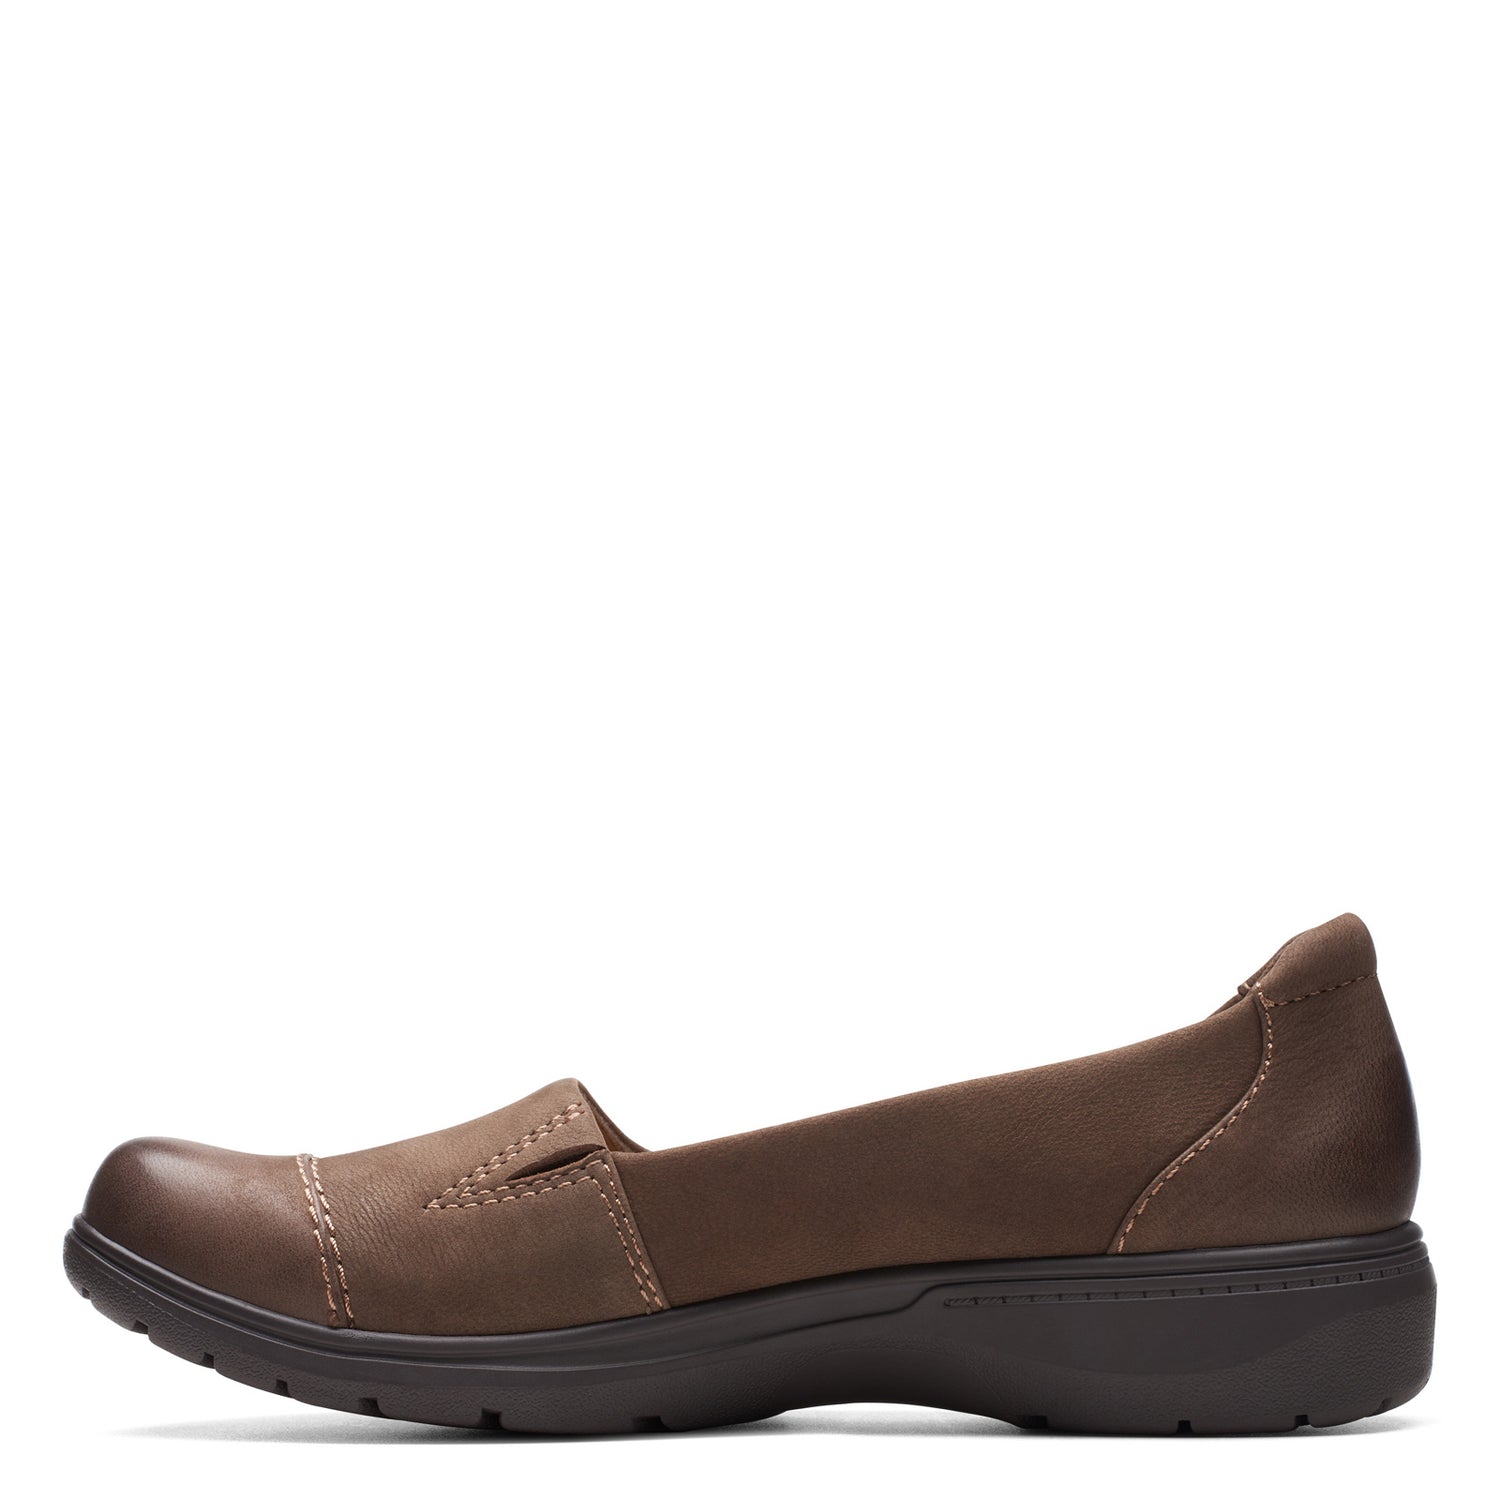 Peltz Shoes  Women's Clarks Carleigh Lulin Slip-On TAUPE 26175058